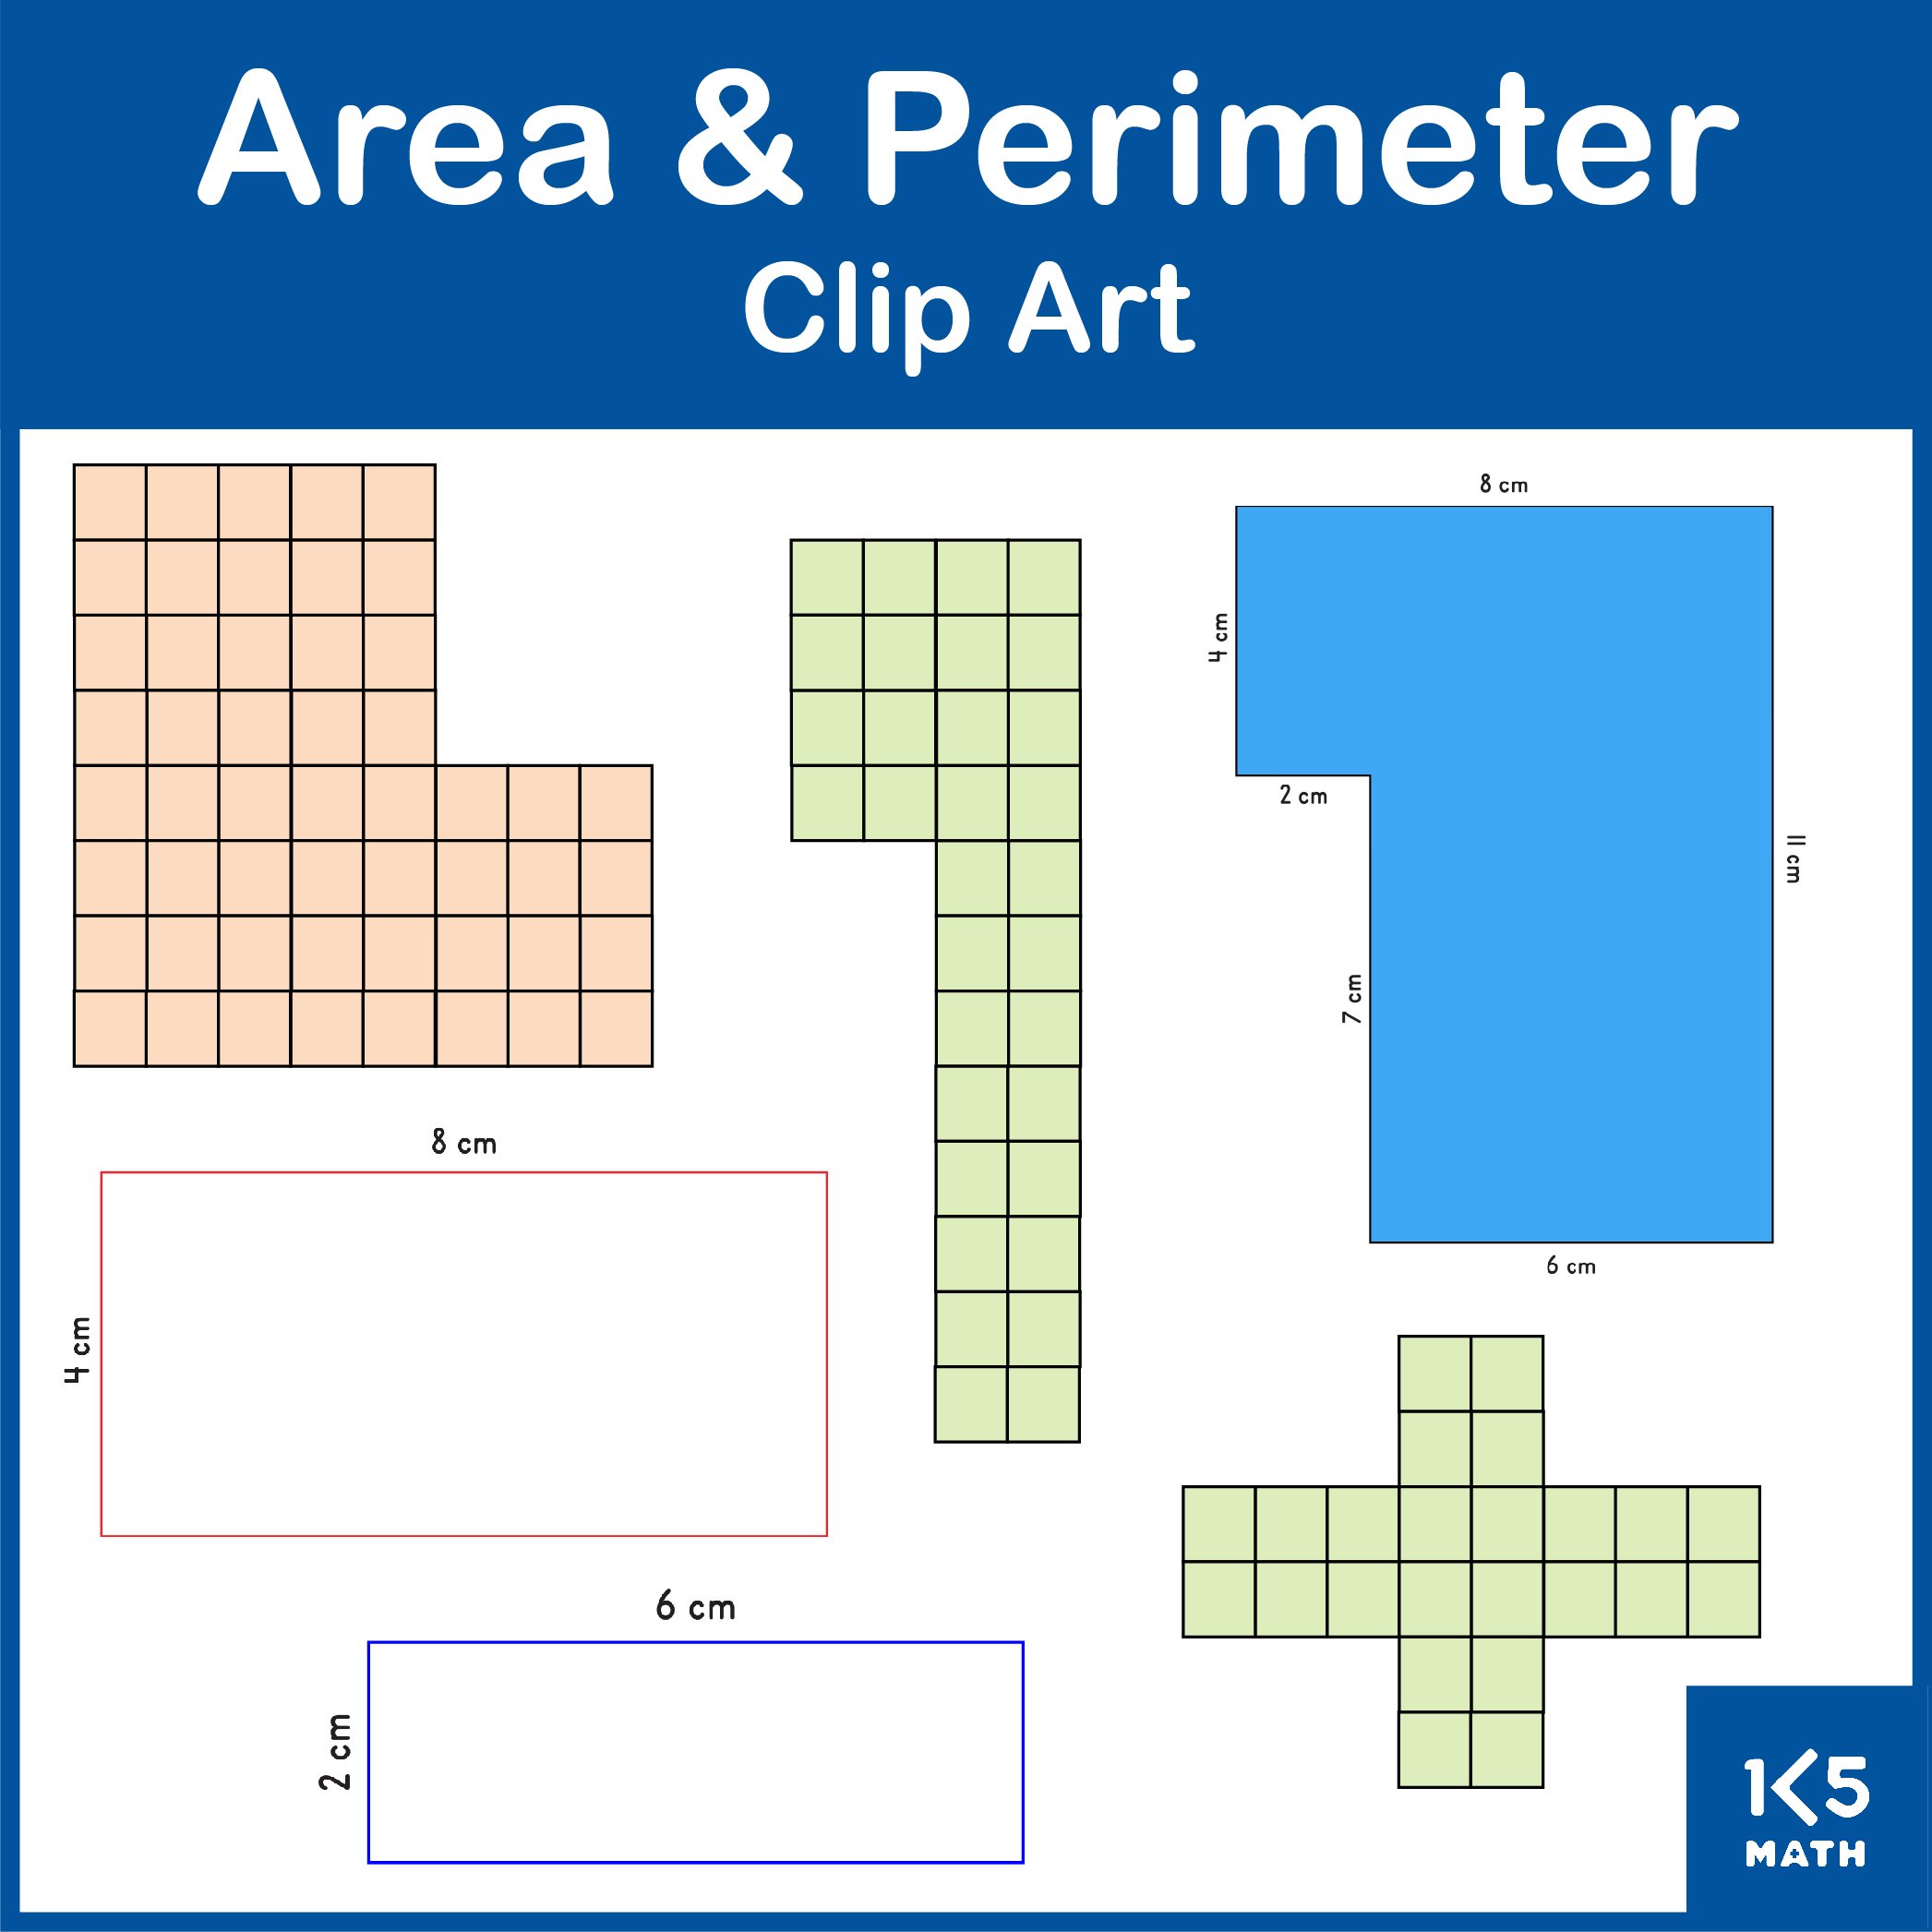 Area & Perimeter Clip Art